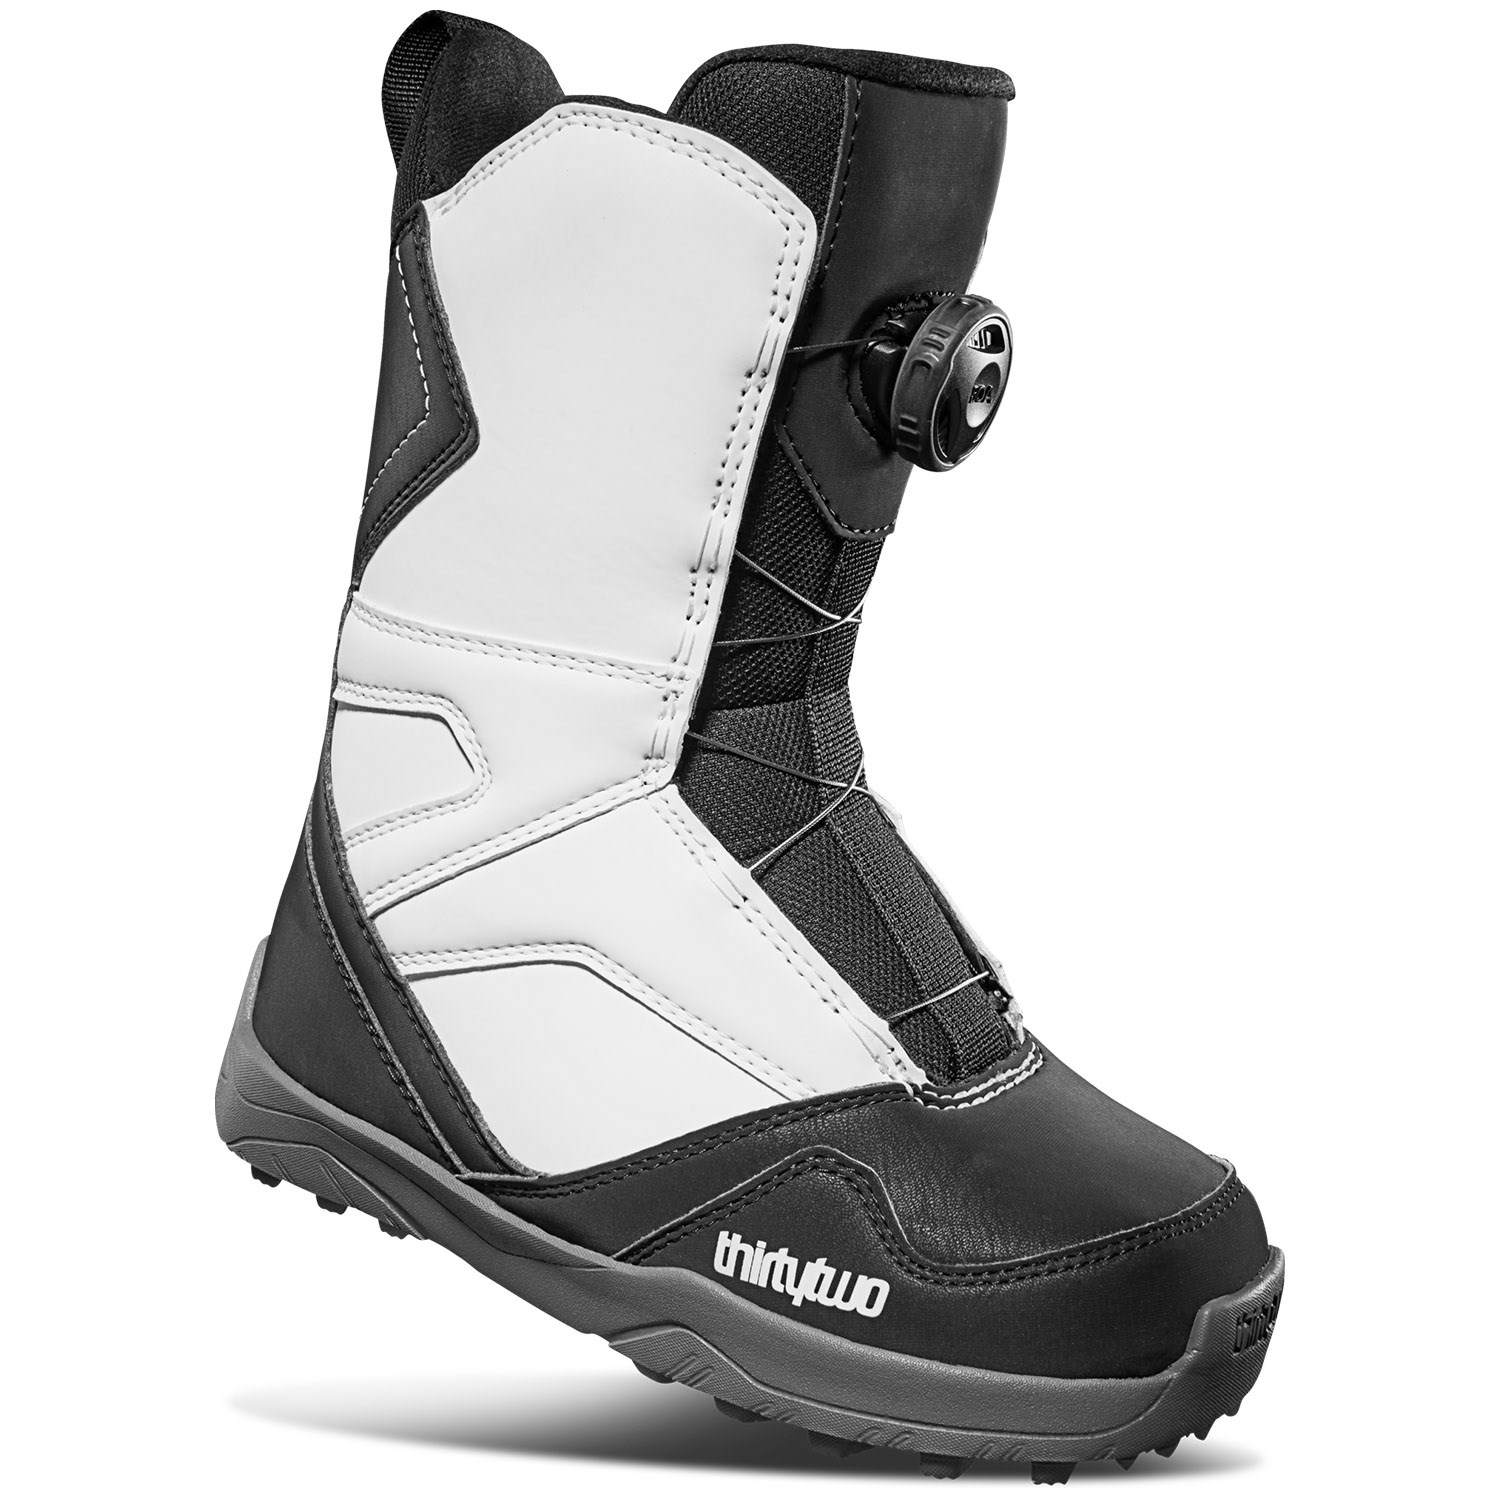 Verbanning Onrustig wrijving thirtytwo Kids Boa Snowboard Boots - Kids' | evo